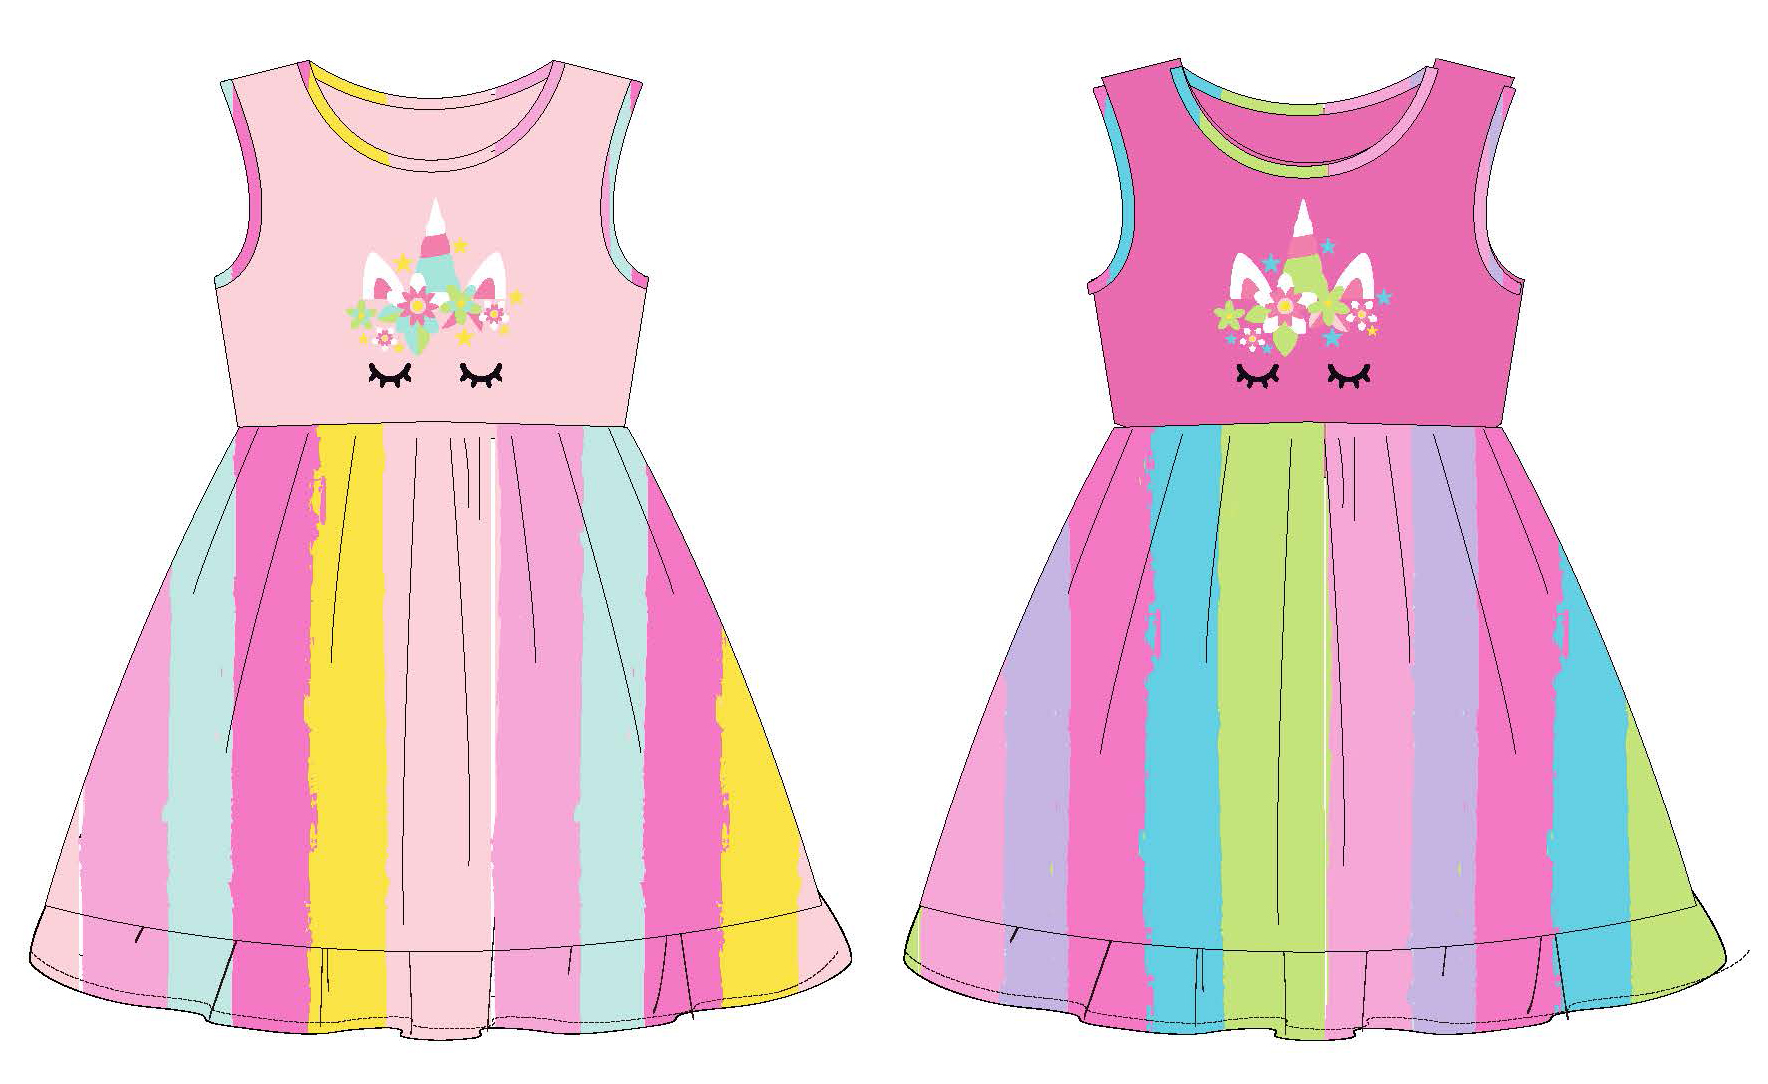 Girl's Sleeveless Rainbow Knit Dress w/ Embroidered UNICORN - Size 4-6X